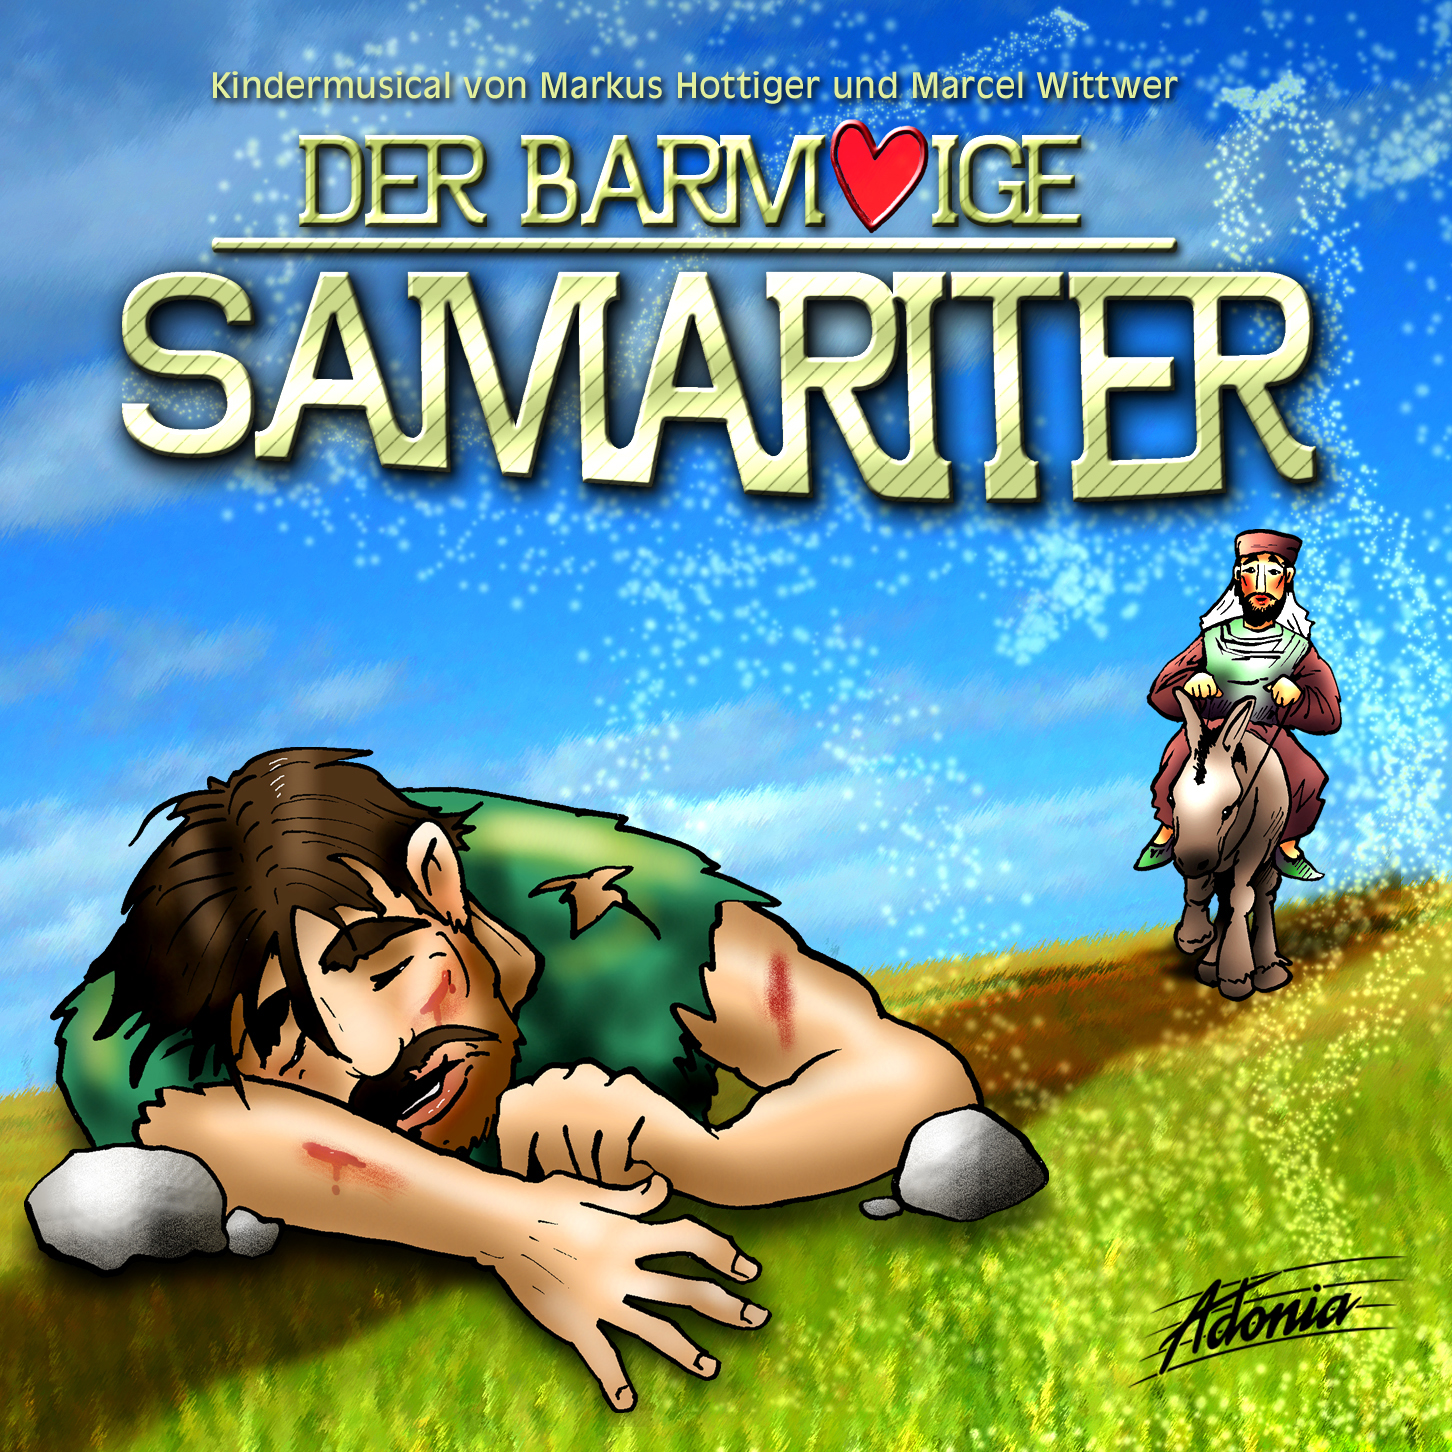 CD Cover "Der barmherzige Samariter" Adonia